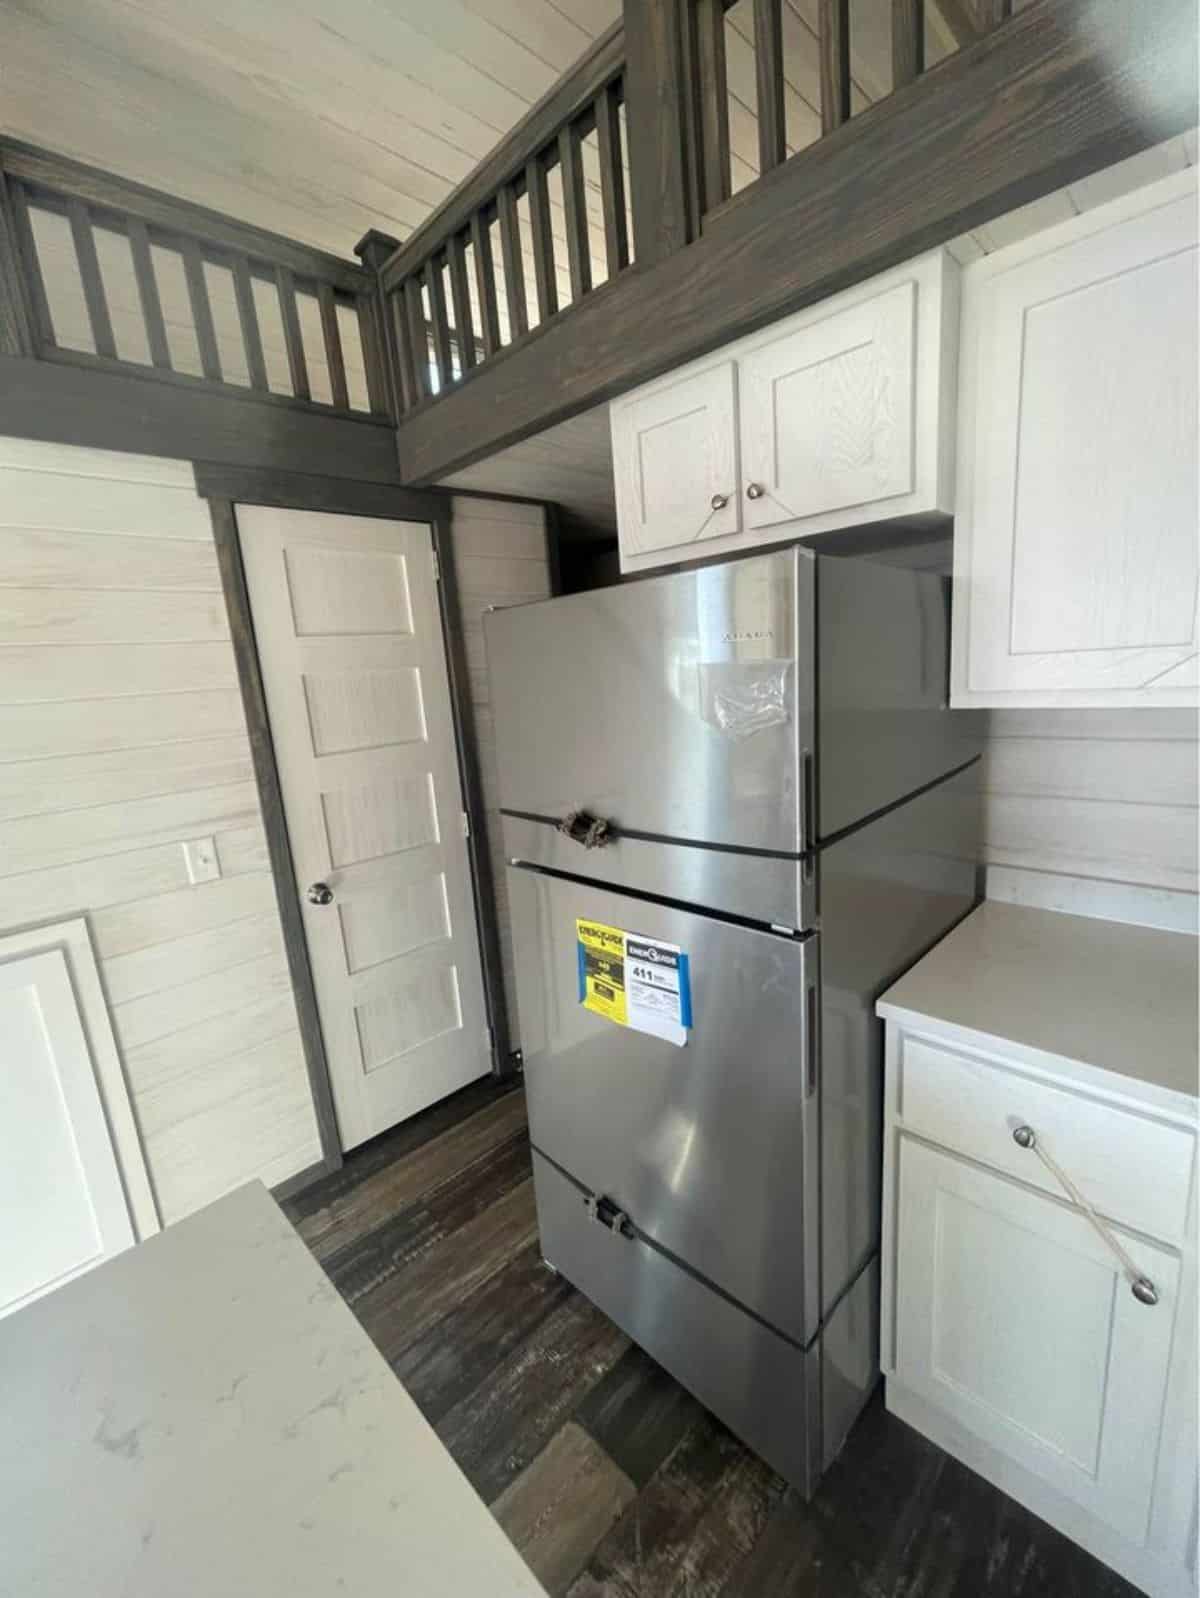 Triple door refrigerator in kitchen area of tiny luxury home